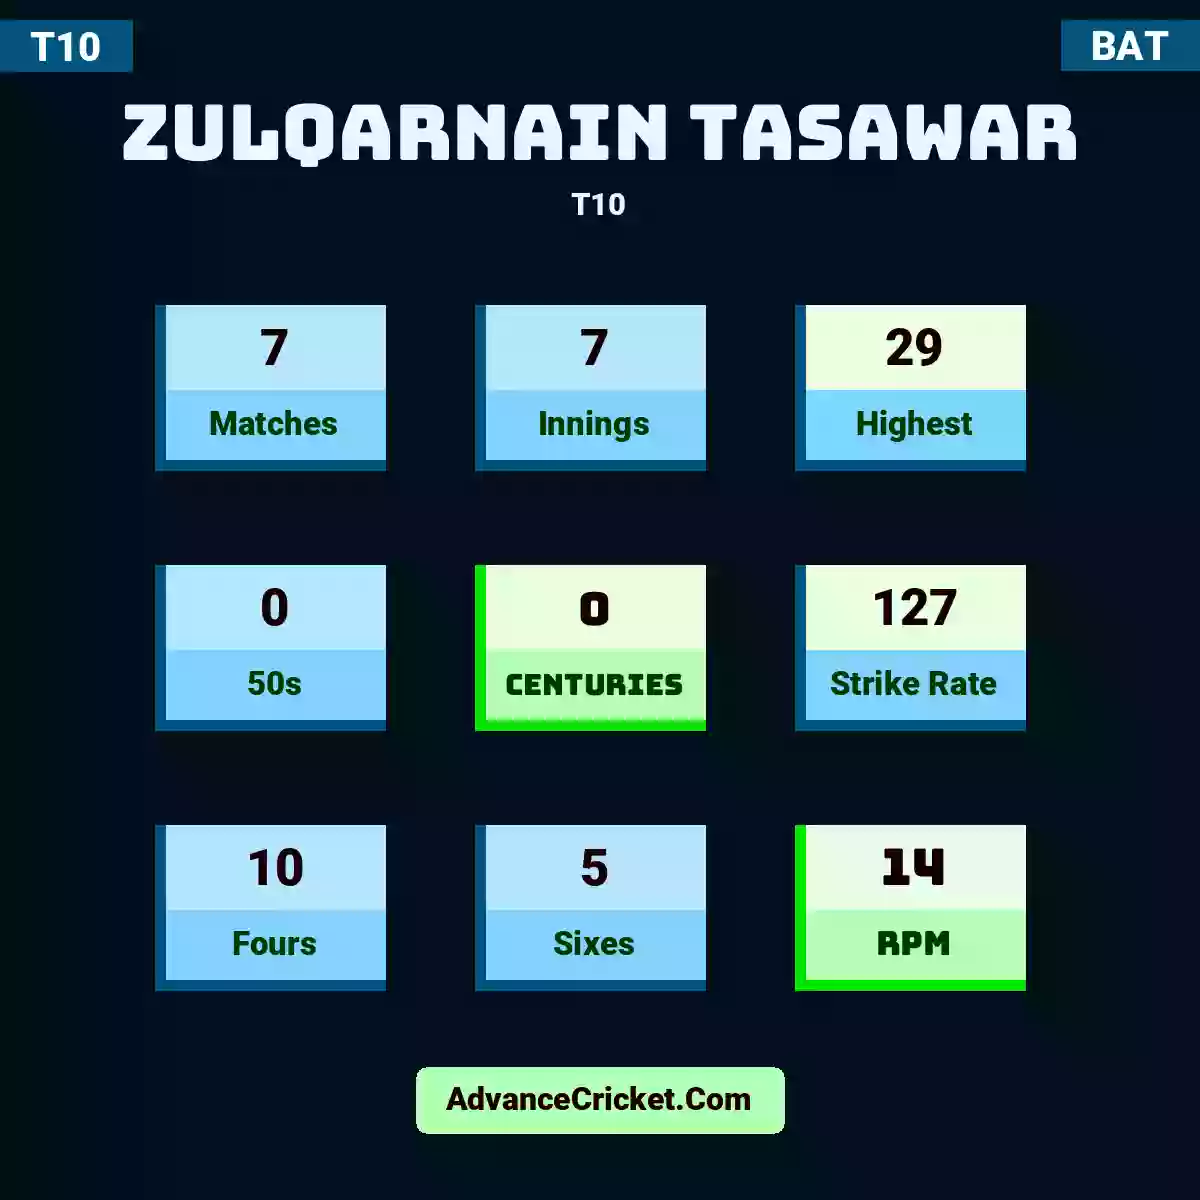 Zulqarnain Tasawar T10 , Zulqarnain Tasawar played 7 matches, scored 29 runs as highest, 0 half-centuries, and 0 centuries, with a strike rate of 127. Z.Tasawar hit 10 fours and 5 sixes, with an RPM of 14.